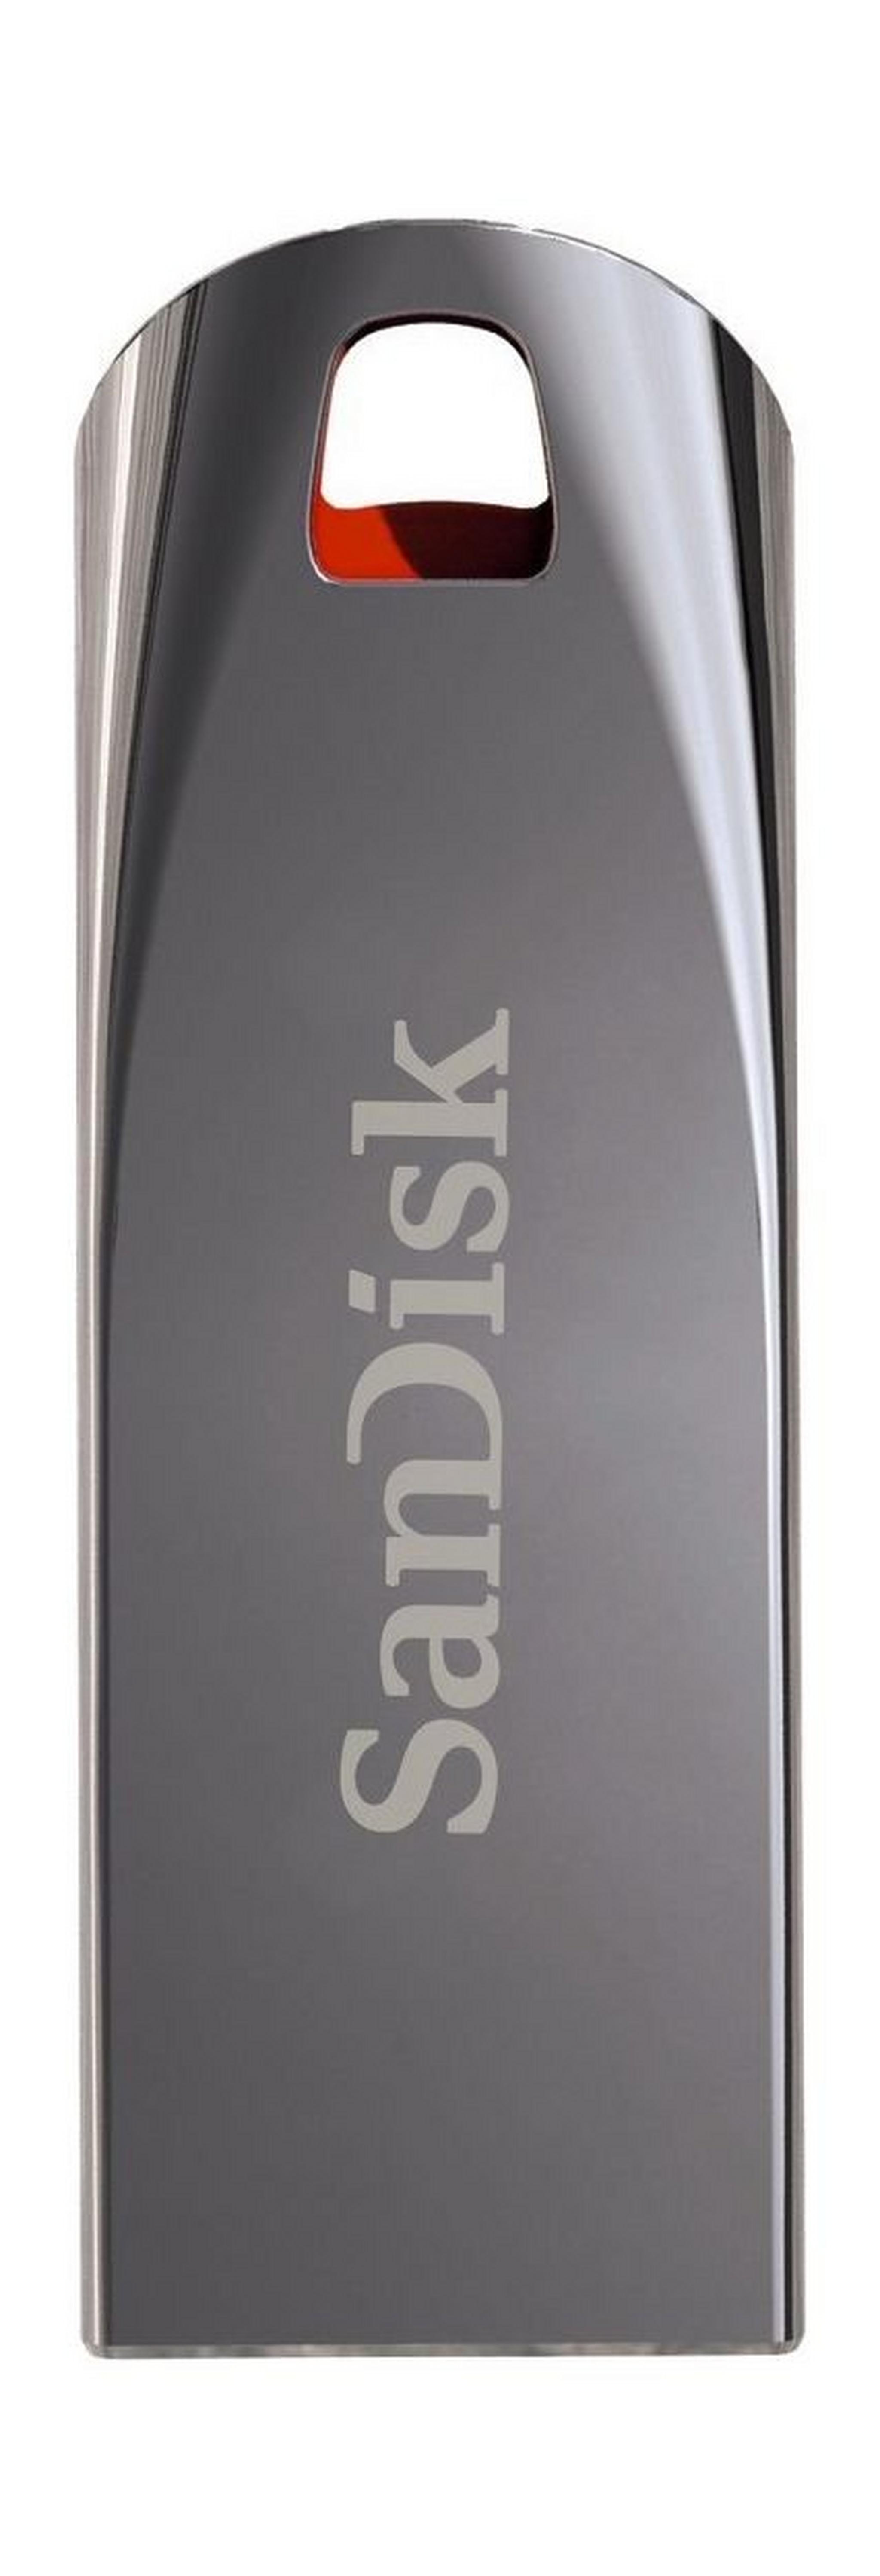 SanDisk Cruzer Force 16GB Flash Drive